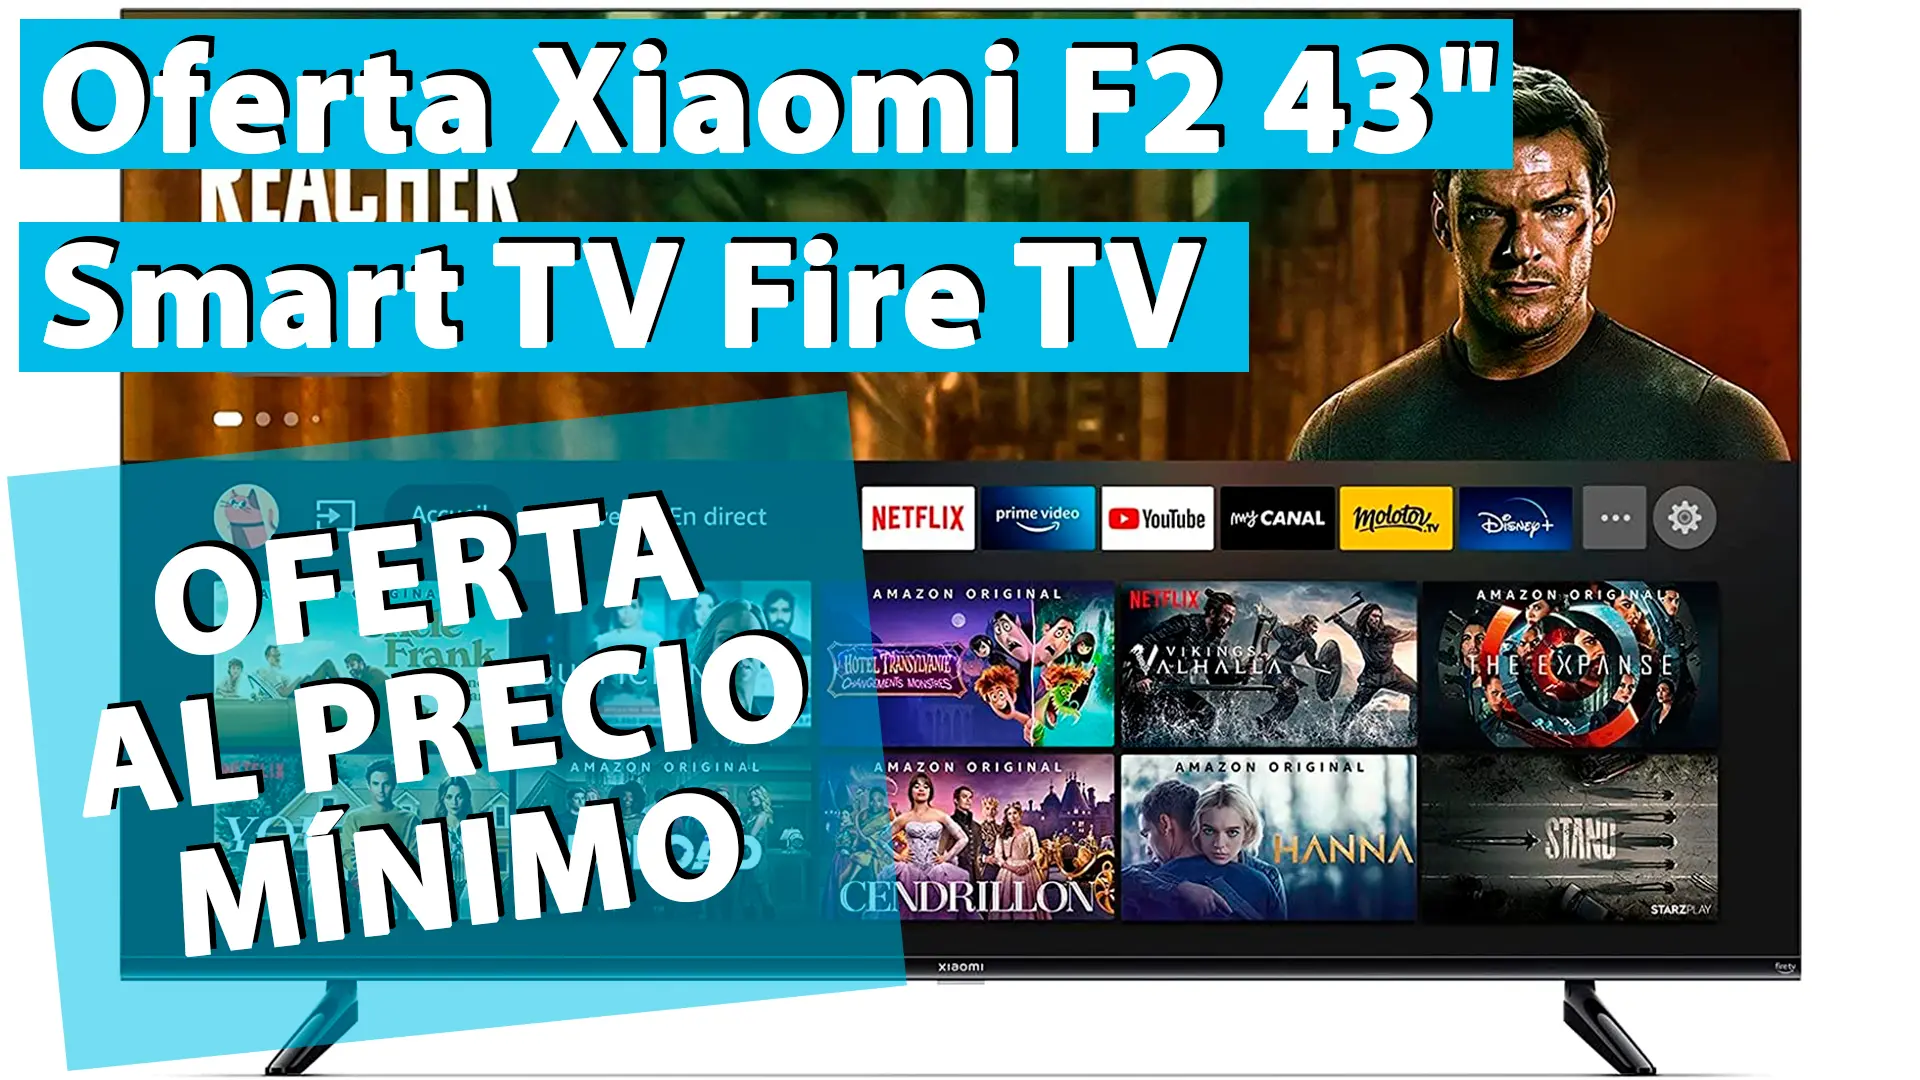 Oferta Xiaomi F2 43 Smart TV Fire TV